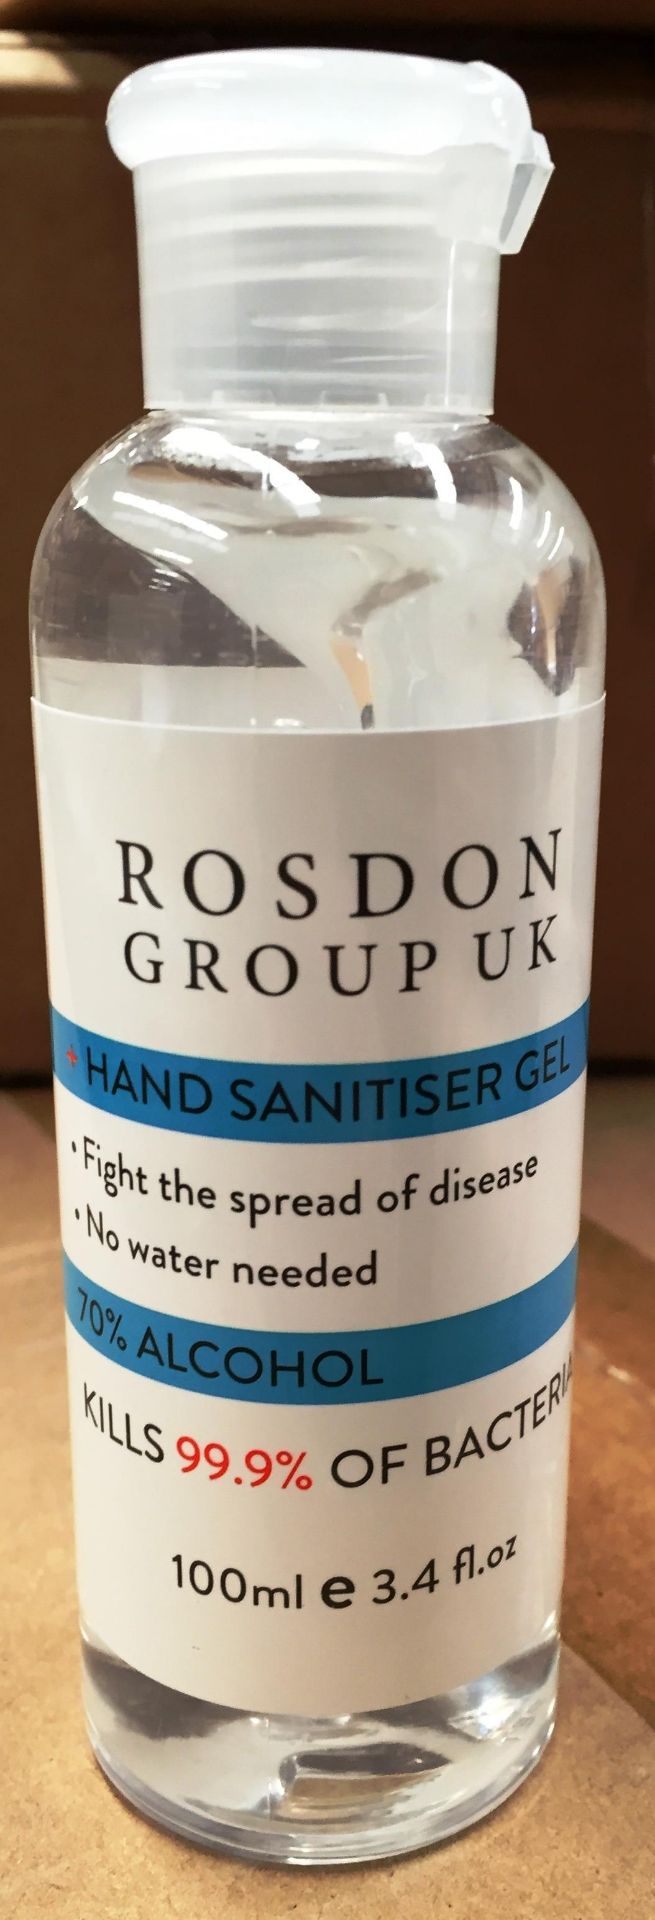 1 x box Rosdon Group Ltd 100ml hand sanitiser (192 units per box)